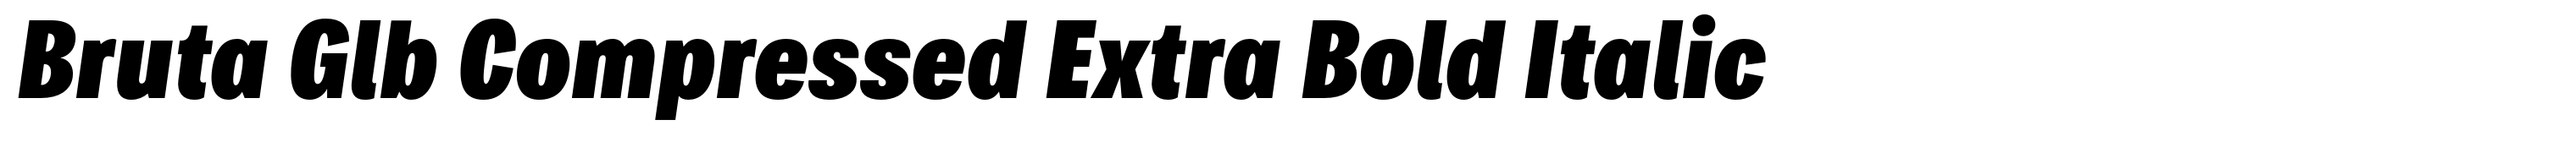 Bruta Glb Compressed Extra Bold Italic